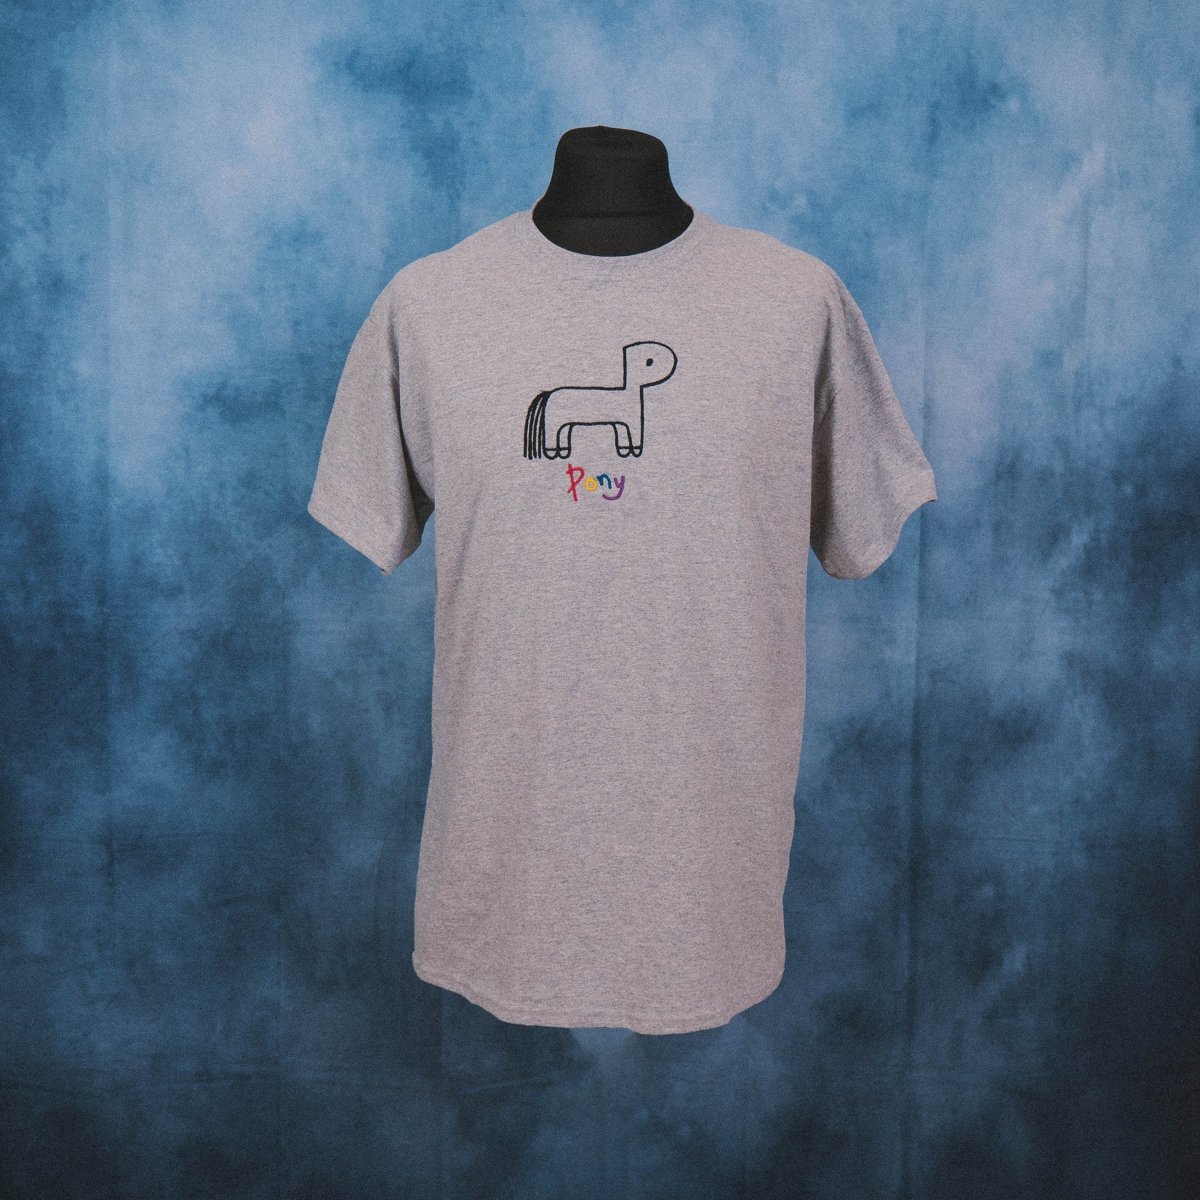 Rex Orange County - Pony Multi Unisex Embroidered T-Shirt